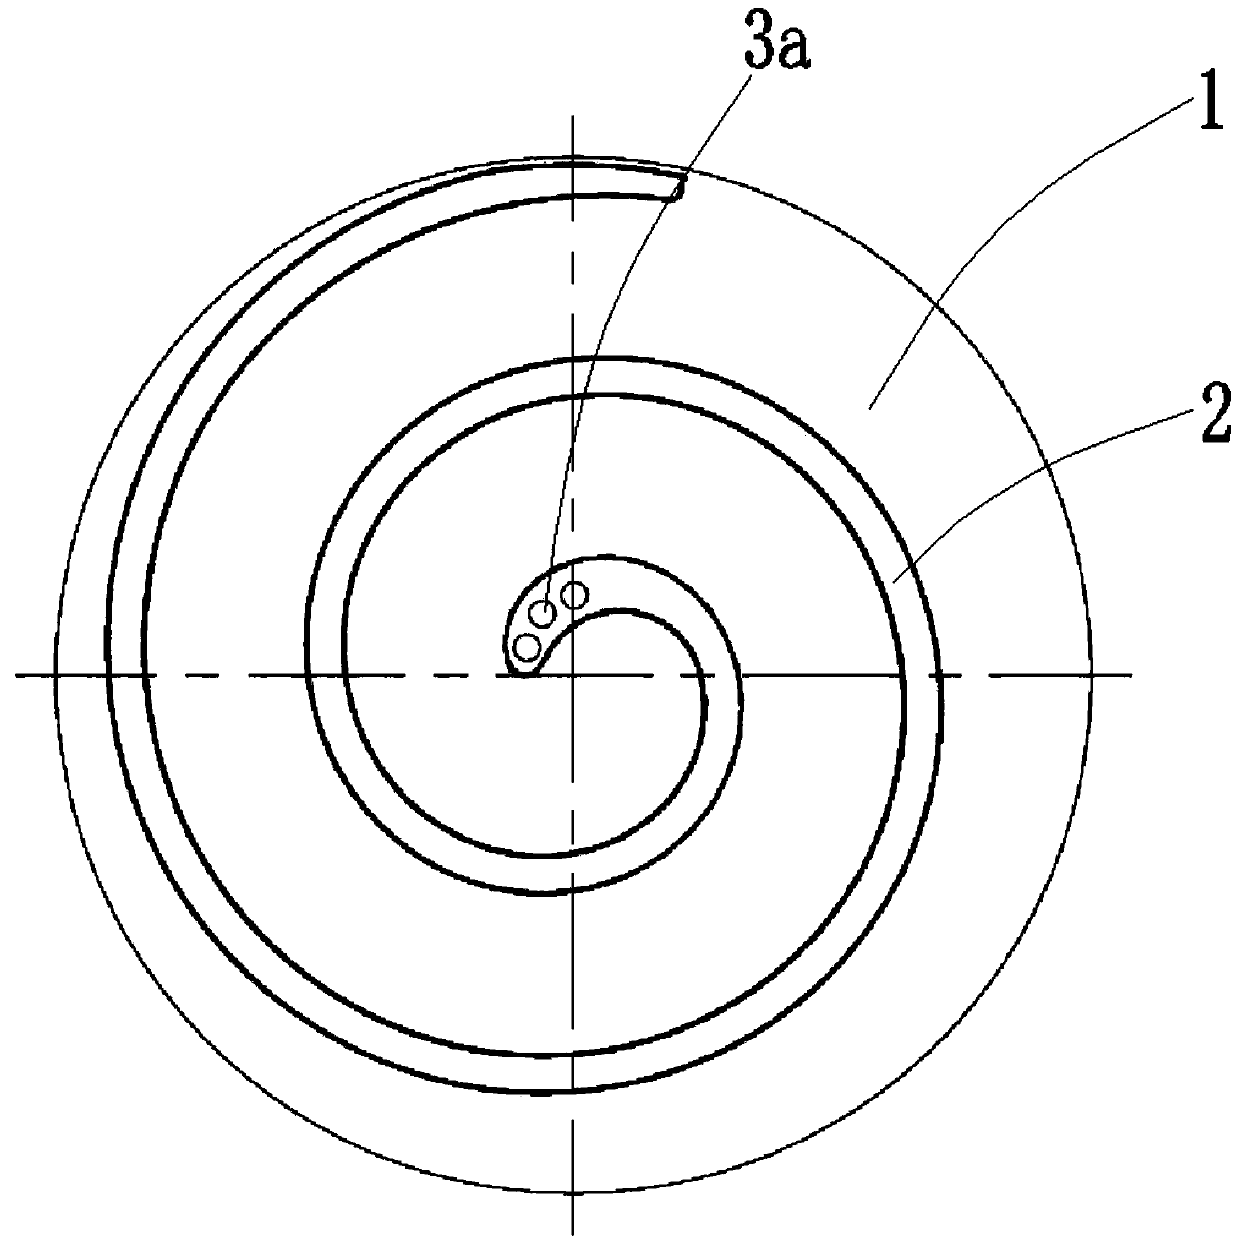 Scroll compressor vortex plate, compressor adopting scroll compressor vortex plate and air conditioner